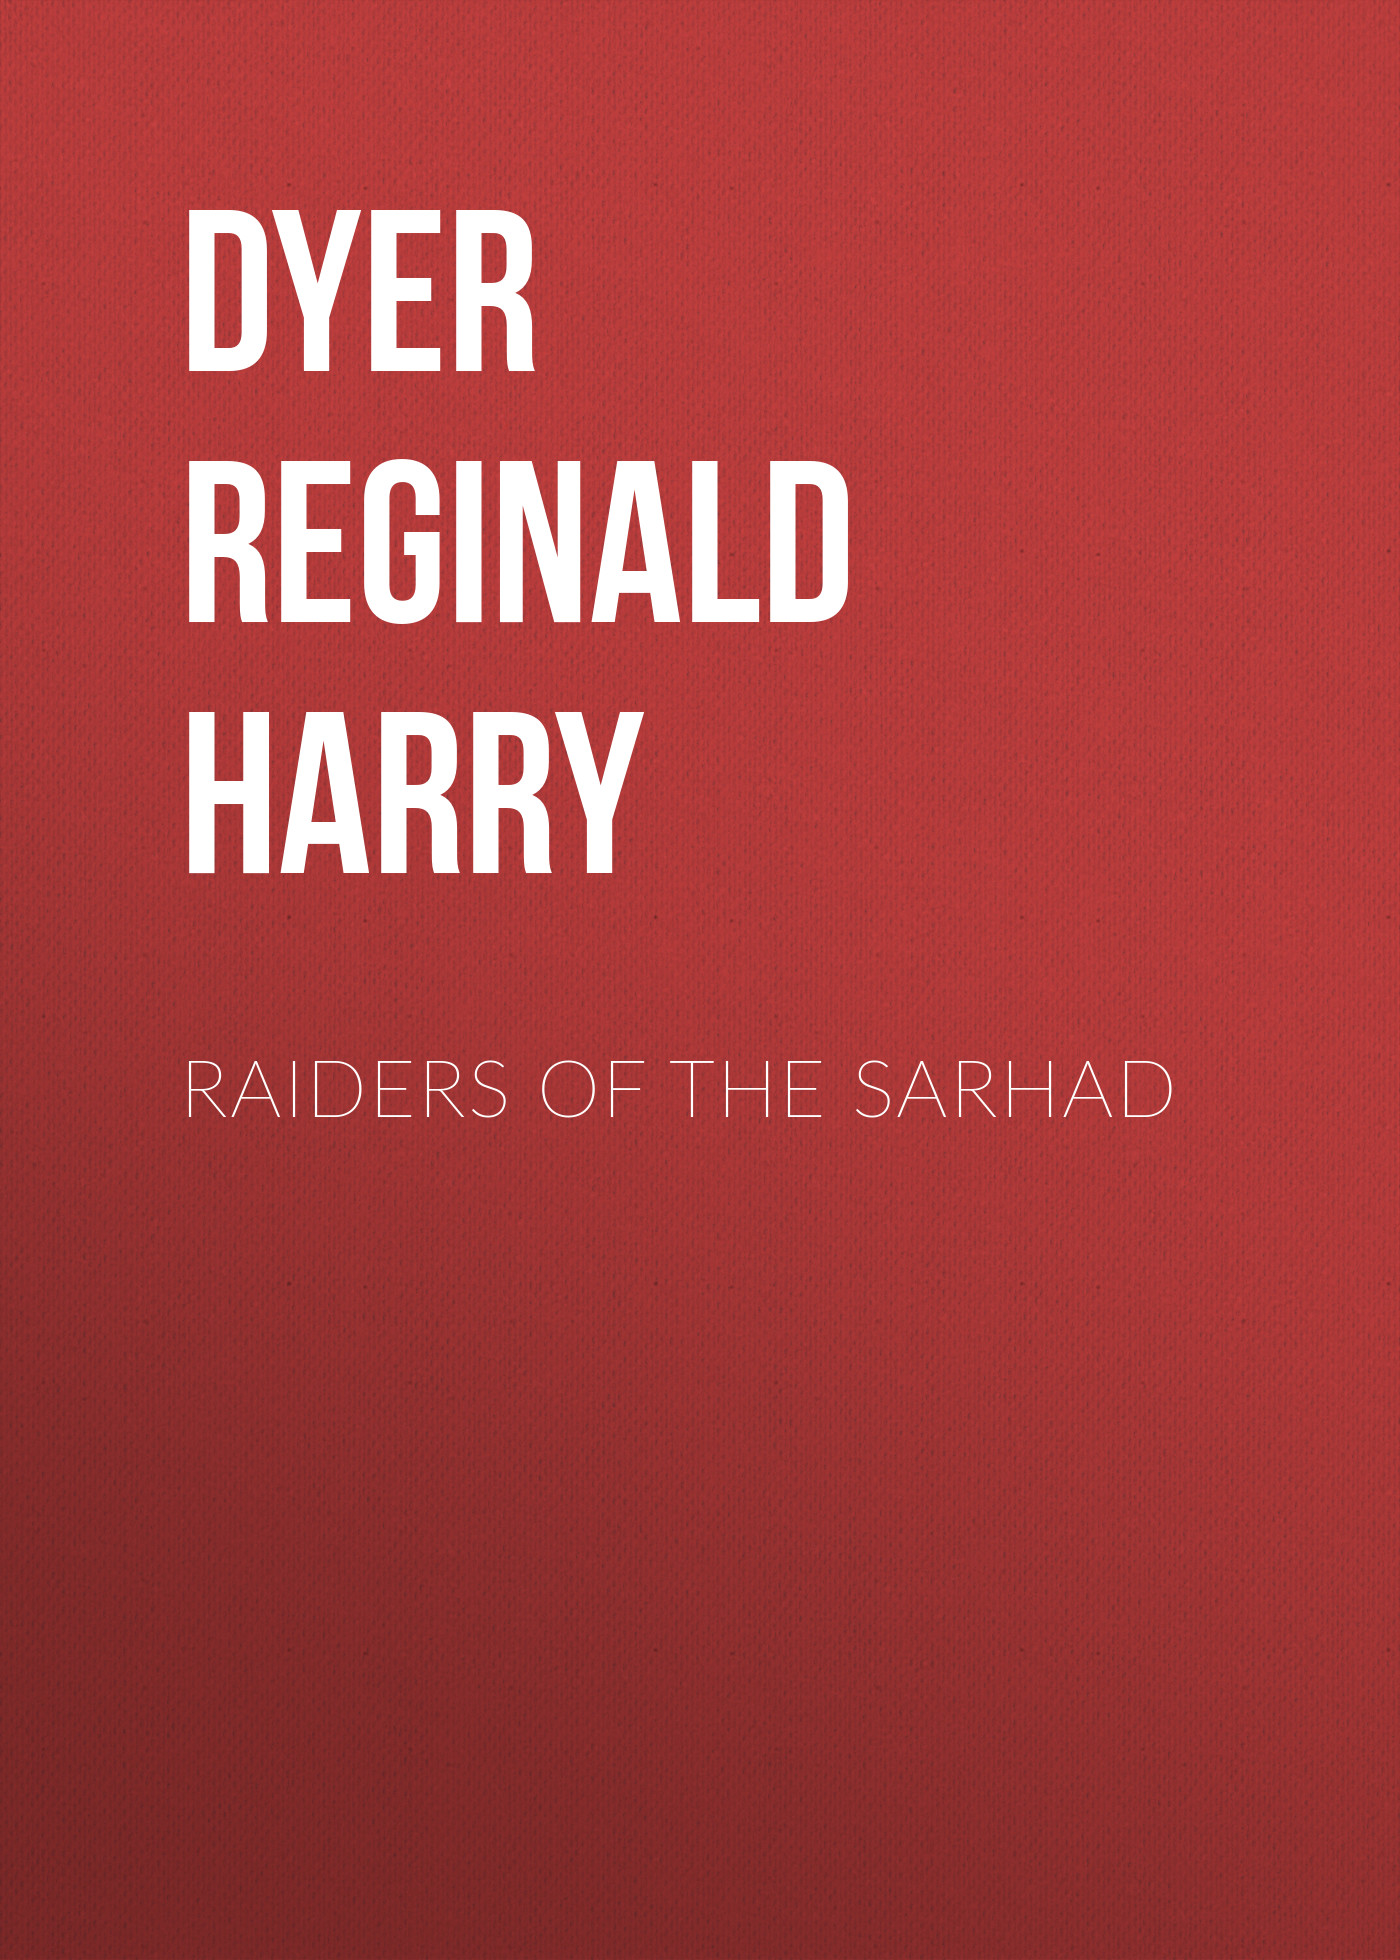 Raiders of the Sarhad